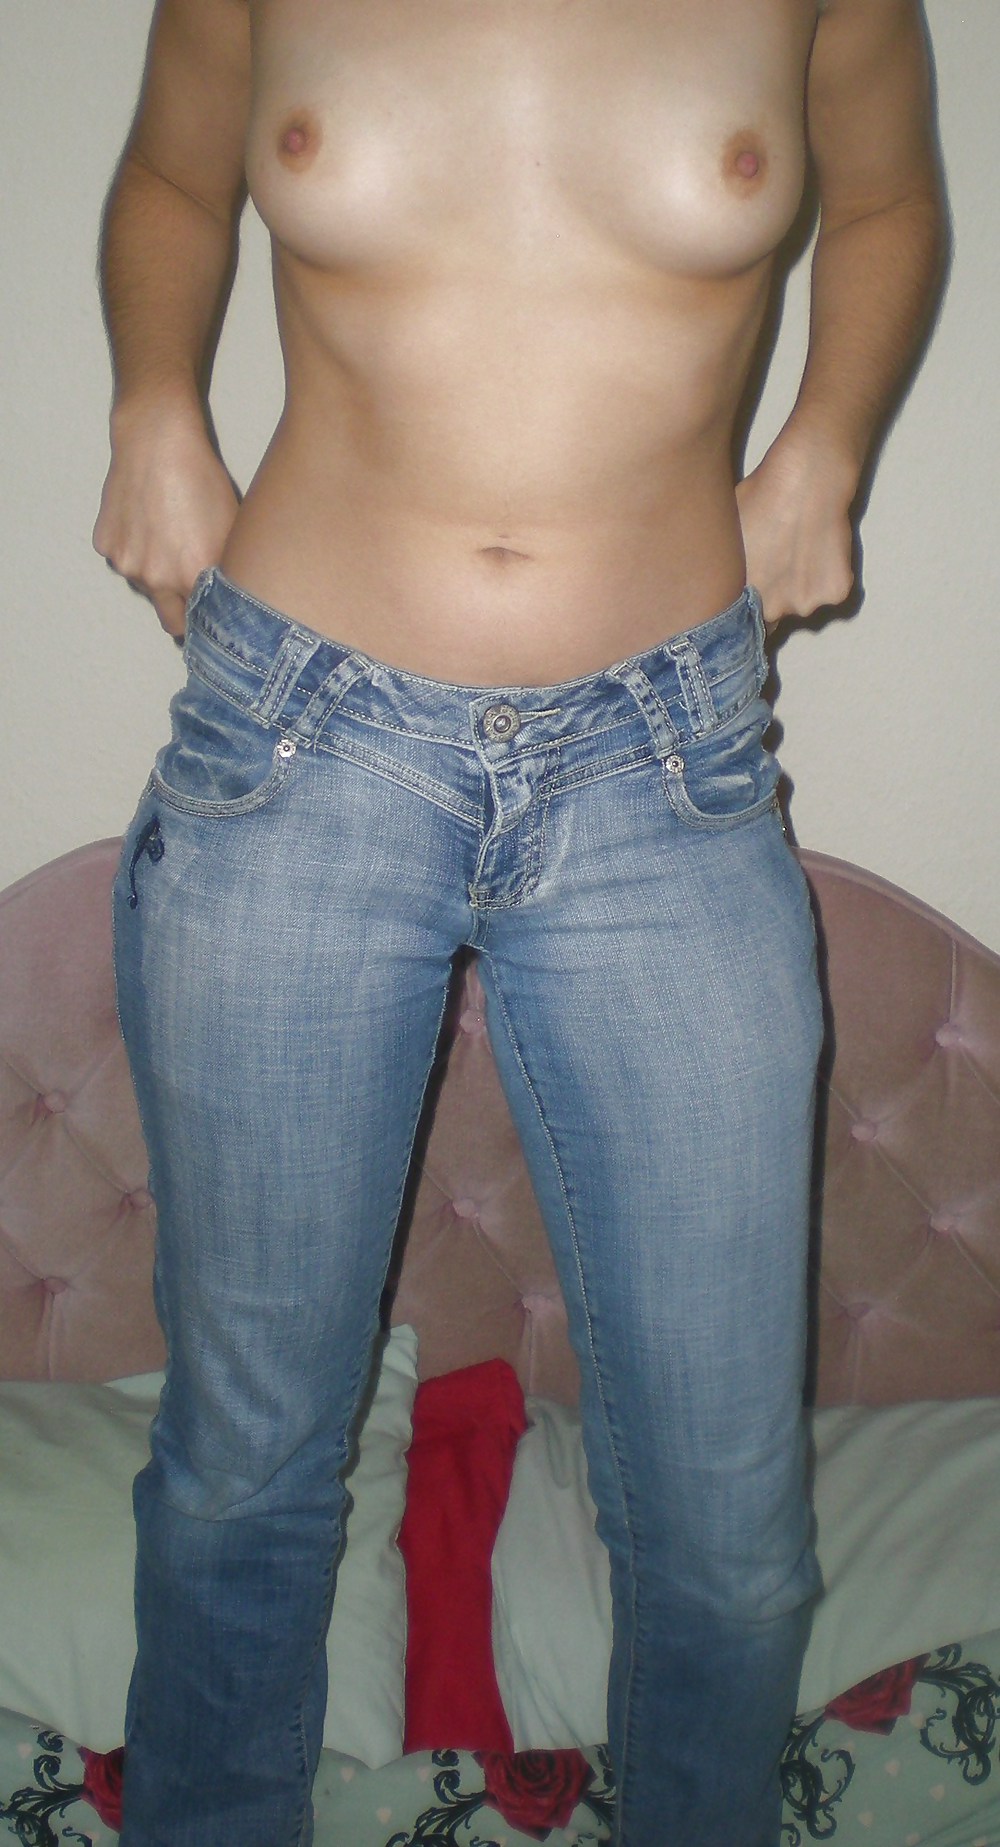 Reinas en jeans cxxxi
 #11197563